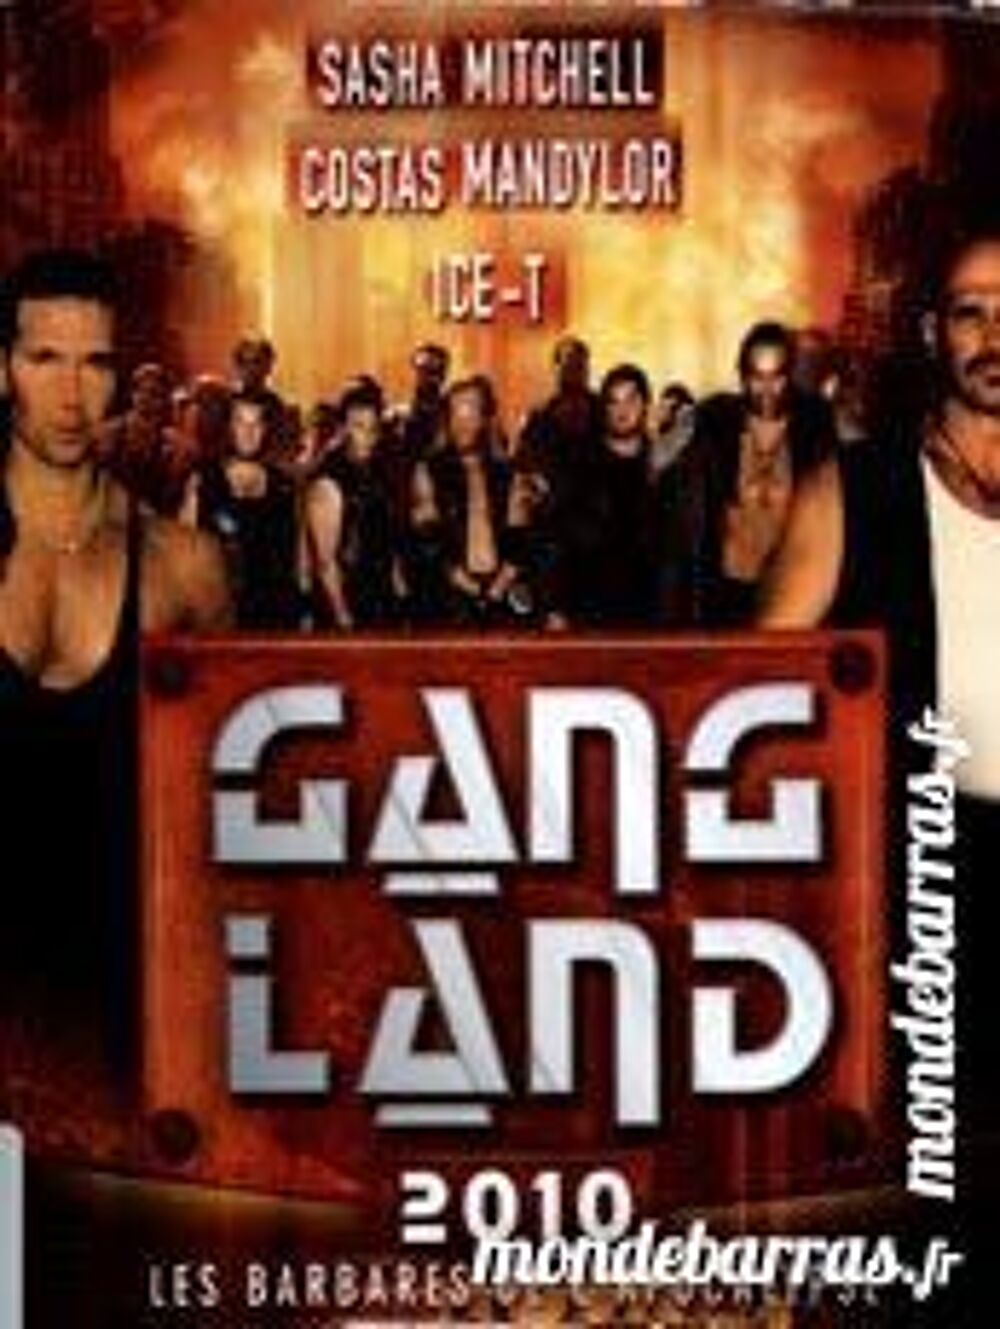 Dvd: Gang land (520) DVD et blu-ray